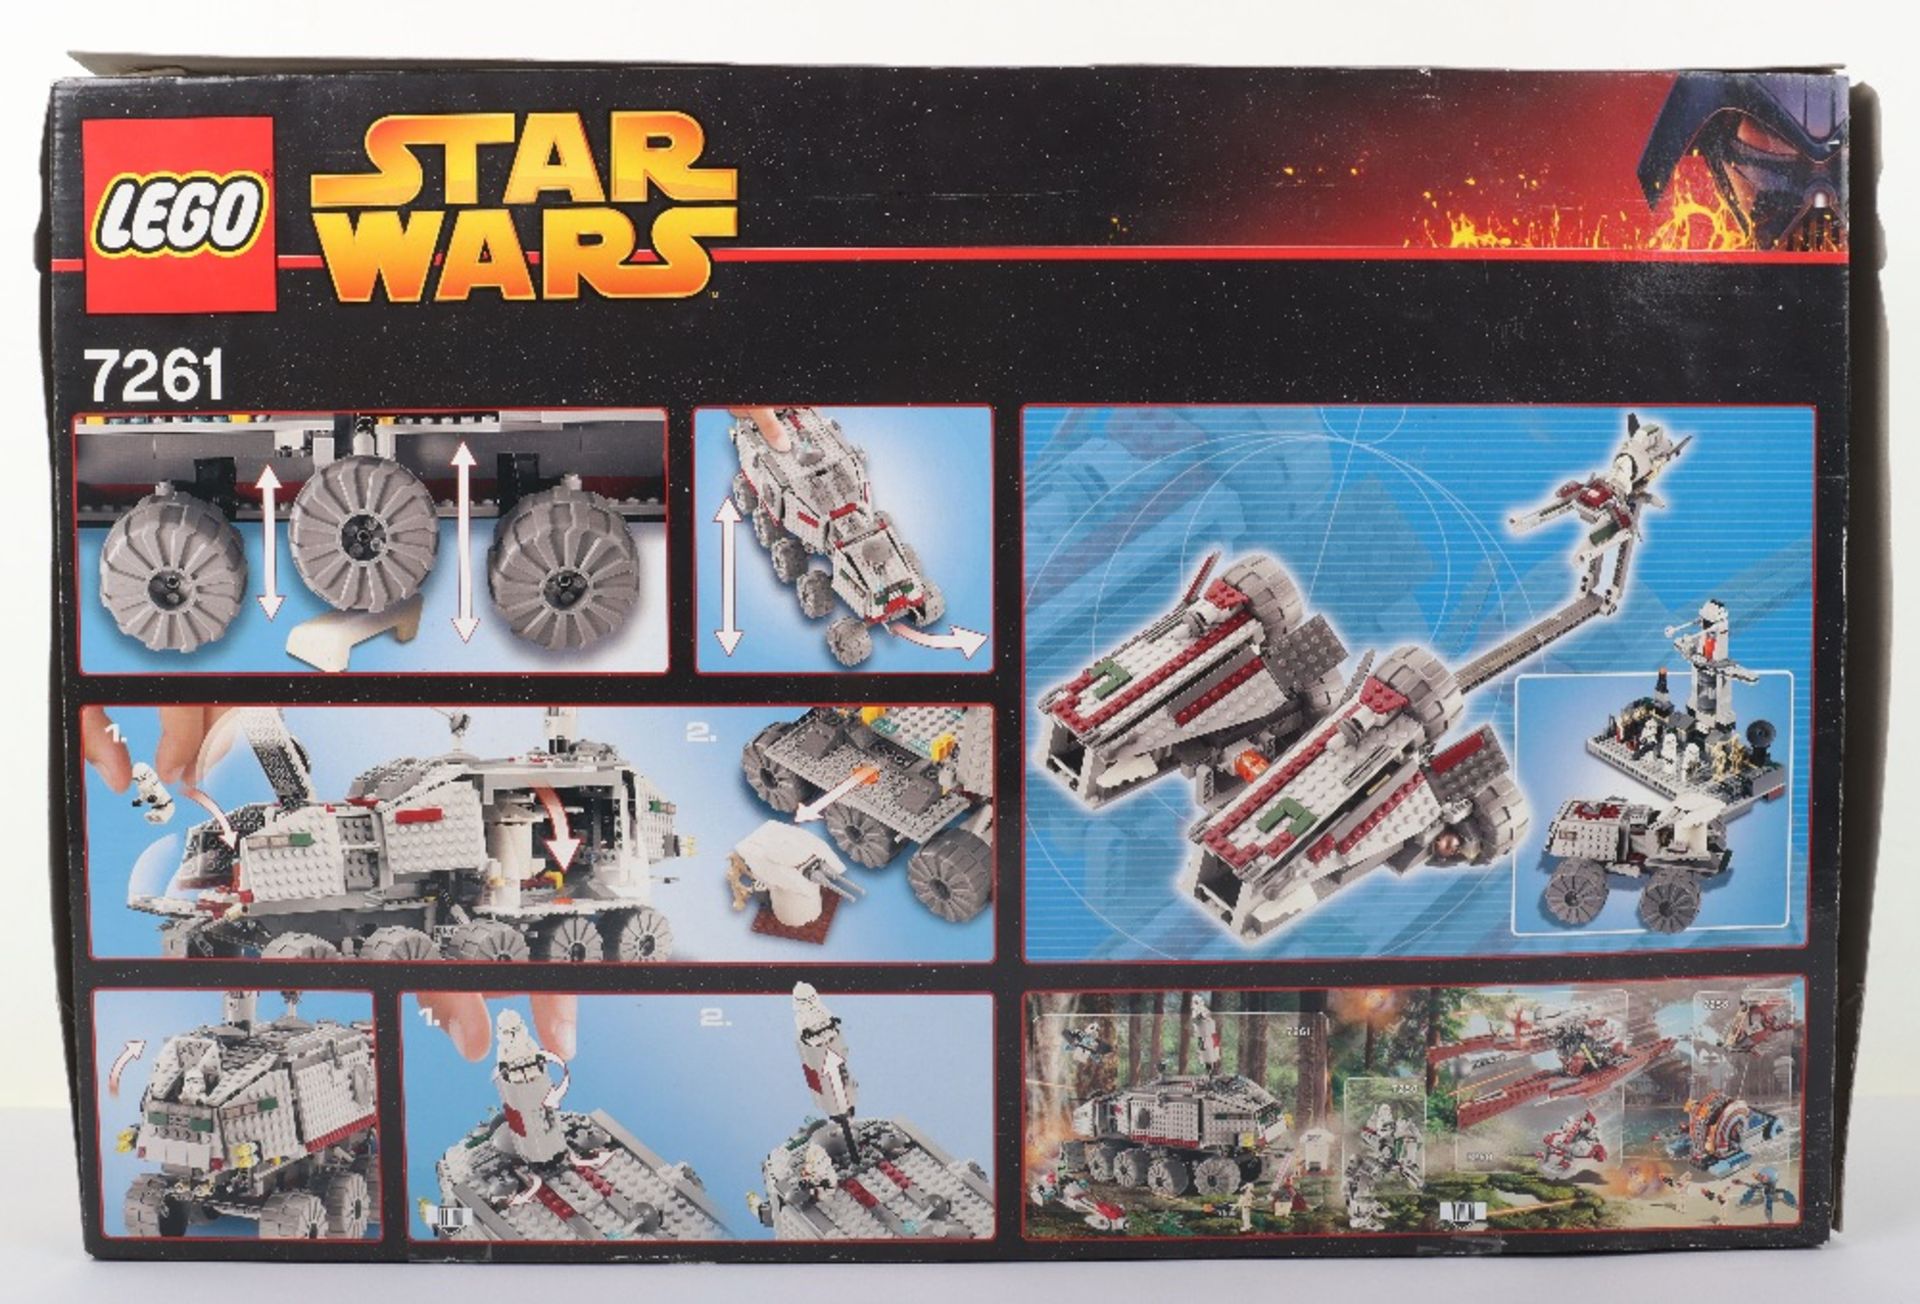 Lego Star Wars 7261 Clone Turbo Tank with light-up Mace Windu boxed - Image 4 of 6